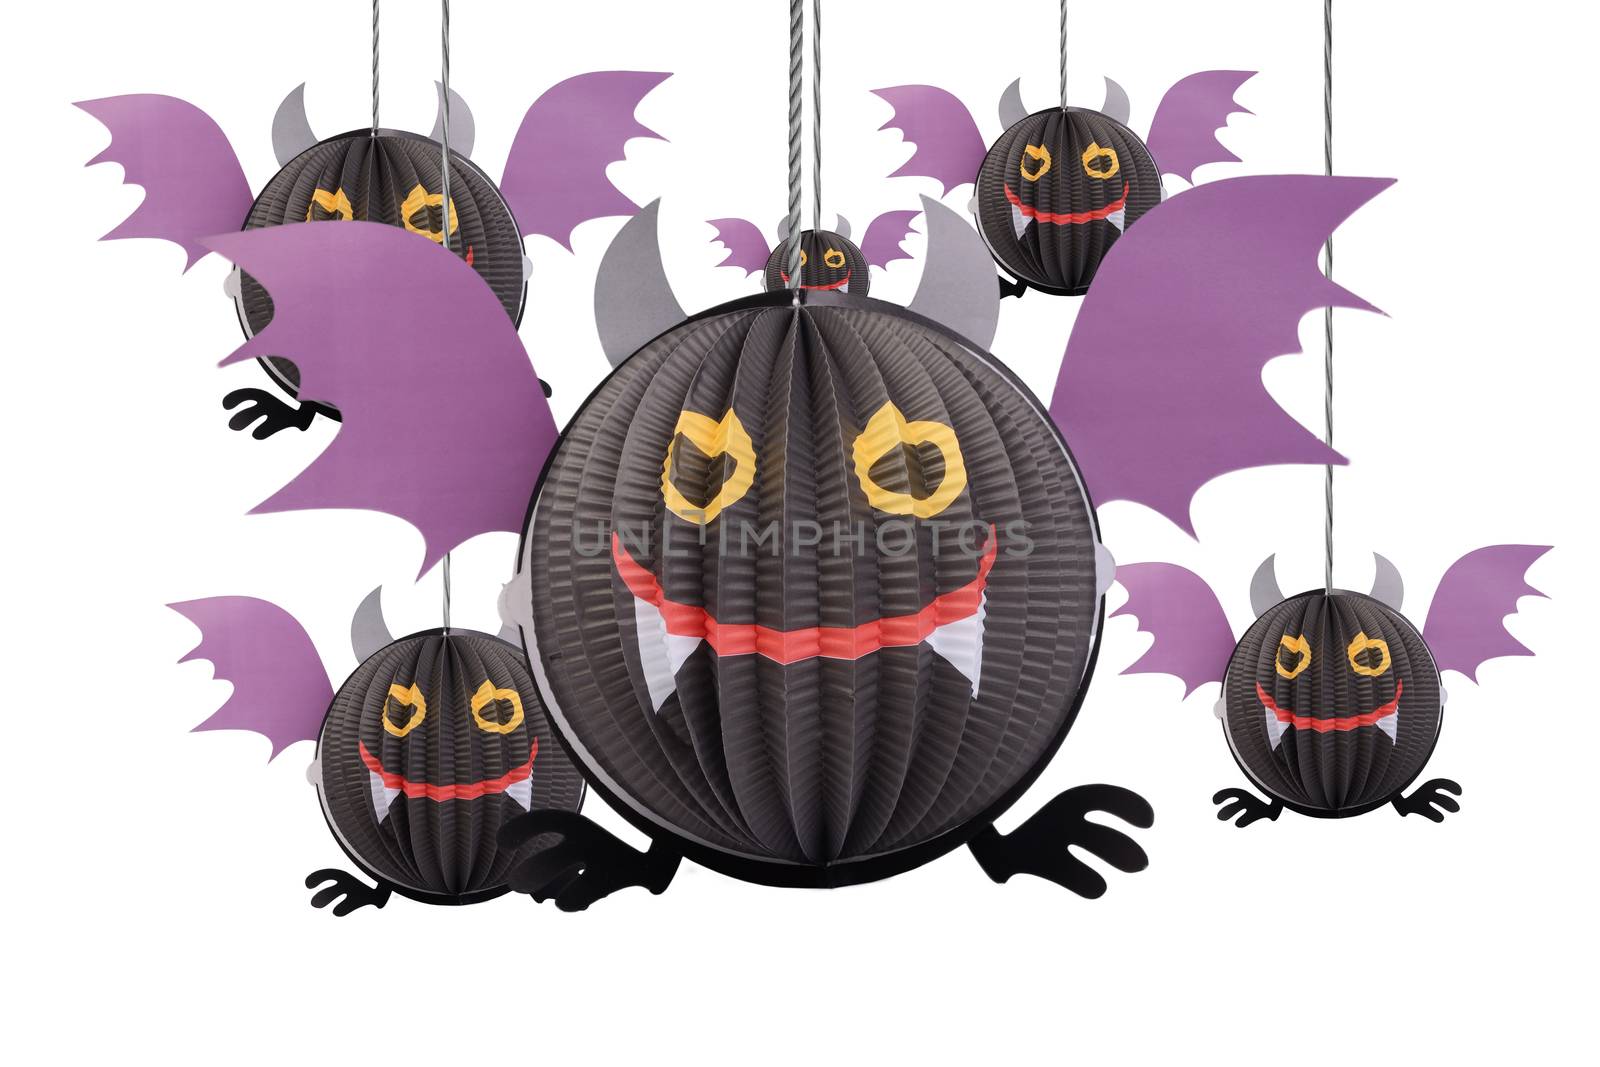 Devil bat hanging mobile for halloween decoration. by pandpstock_002